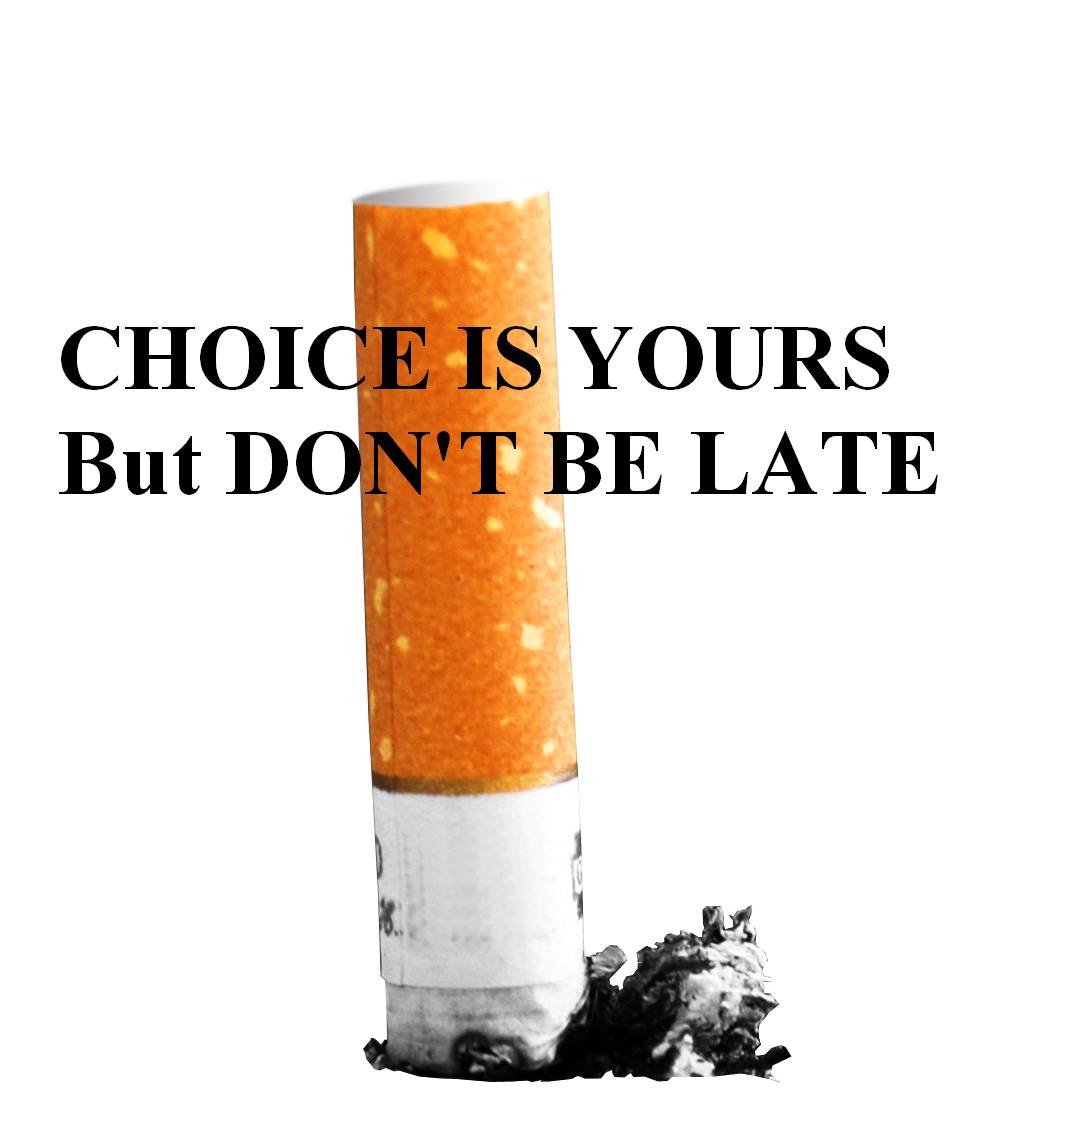 Smoking : A Costly choice